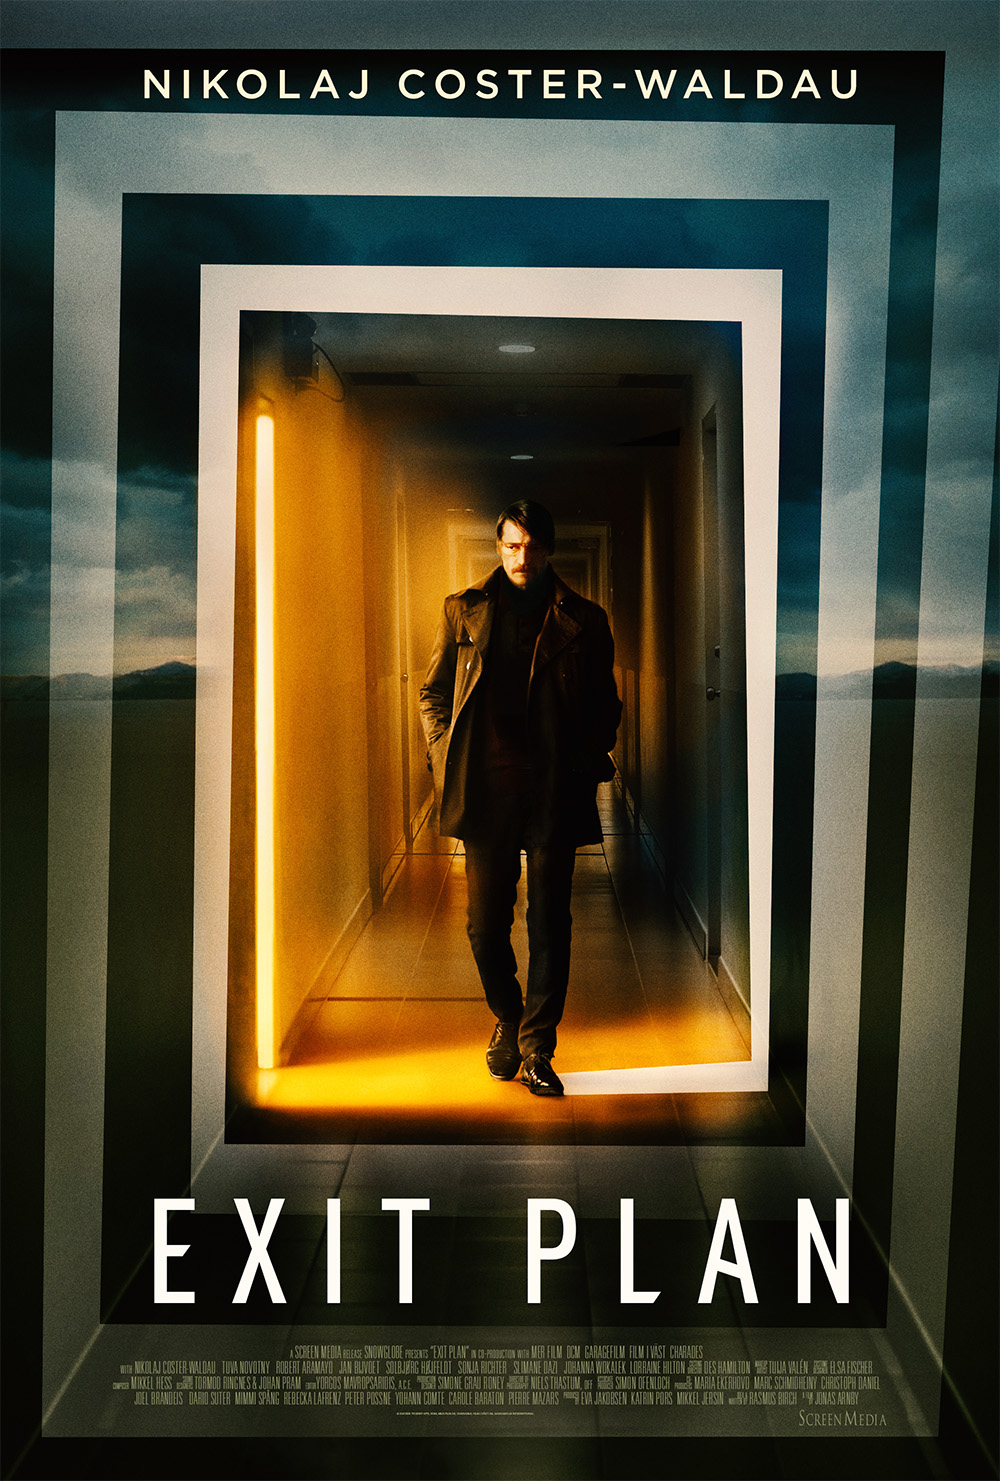 Nikolaj Coster-Waldau stars in 'Exit Plan'